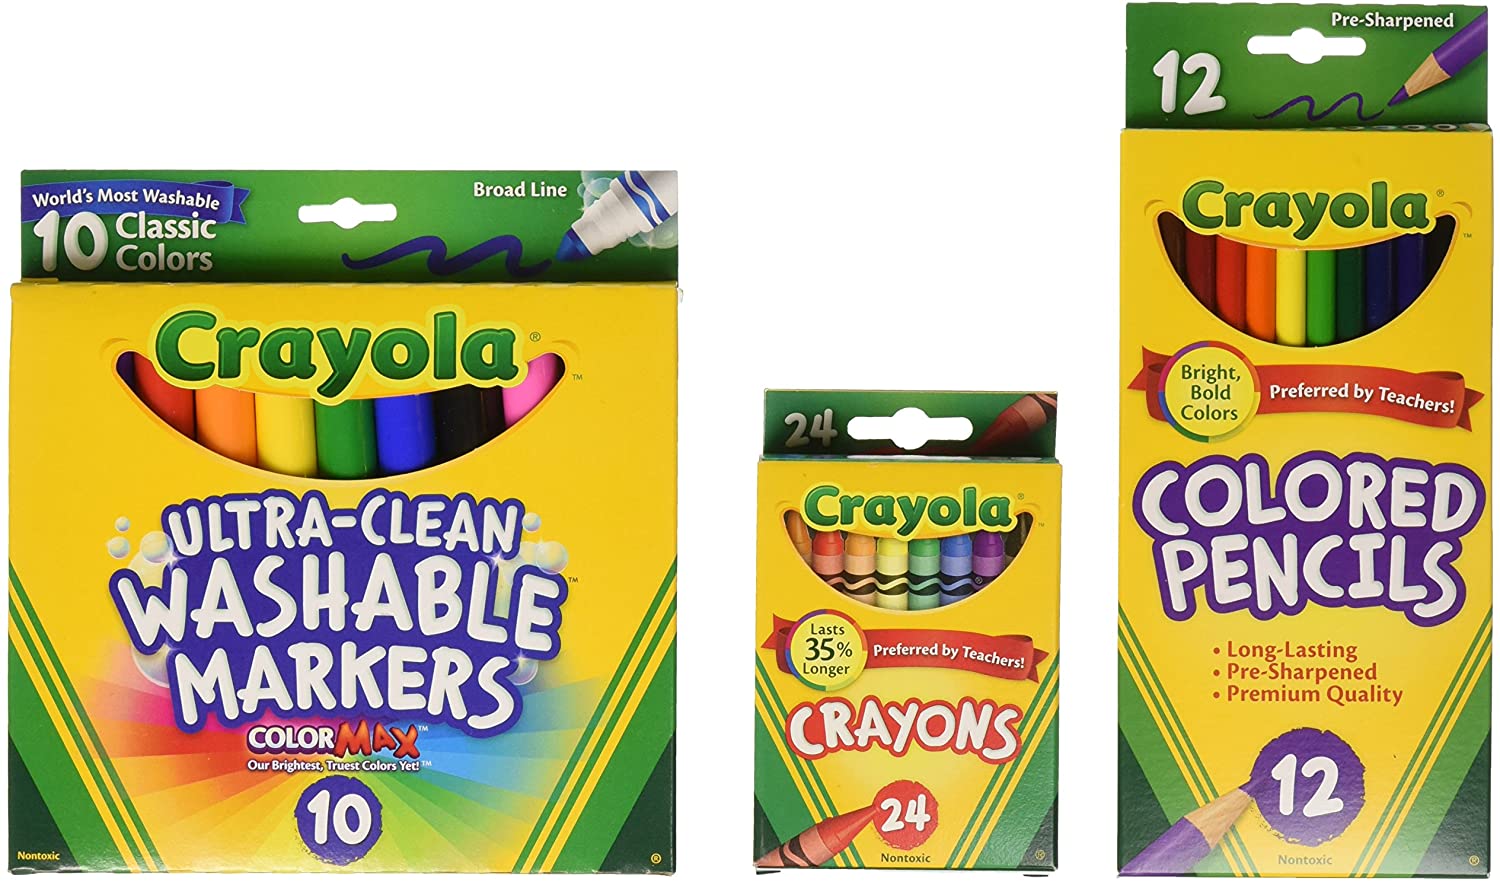 24Count Crayola Neon Crayons Back to School Supplies 